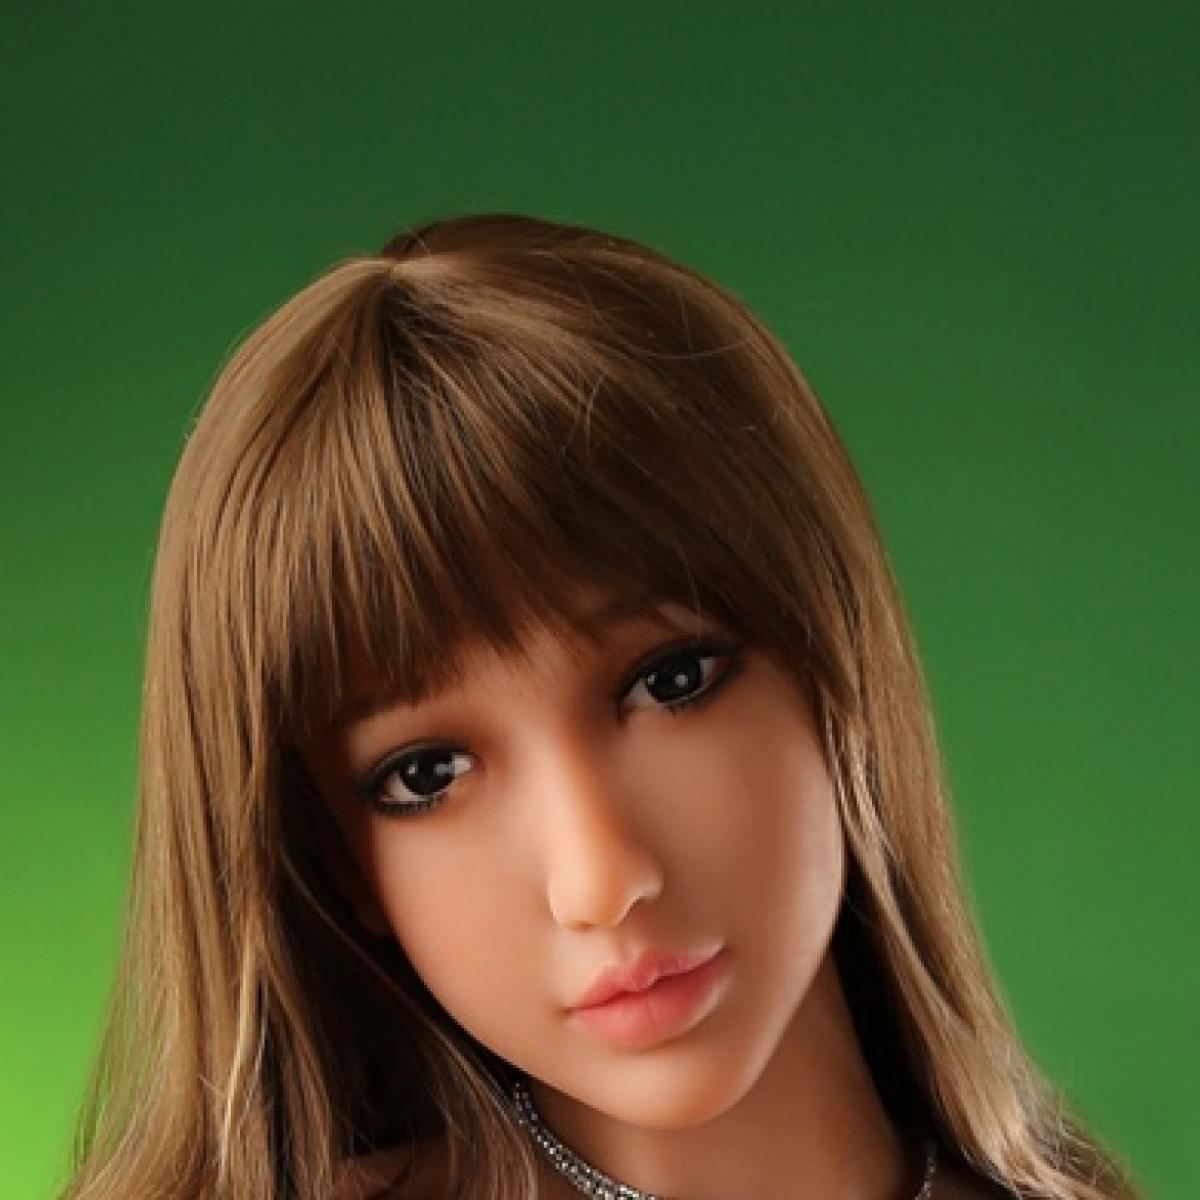 Neodoll Racy - Mika - Sex Doll Head - M16 Compatible - Tan